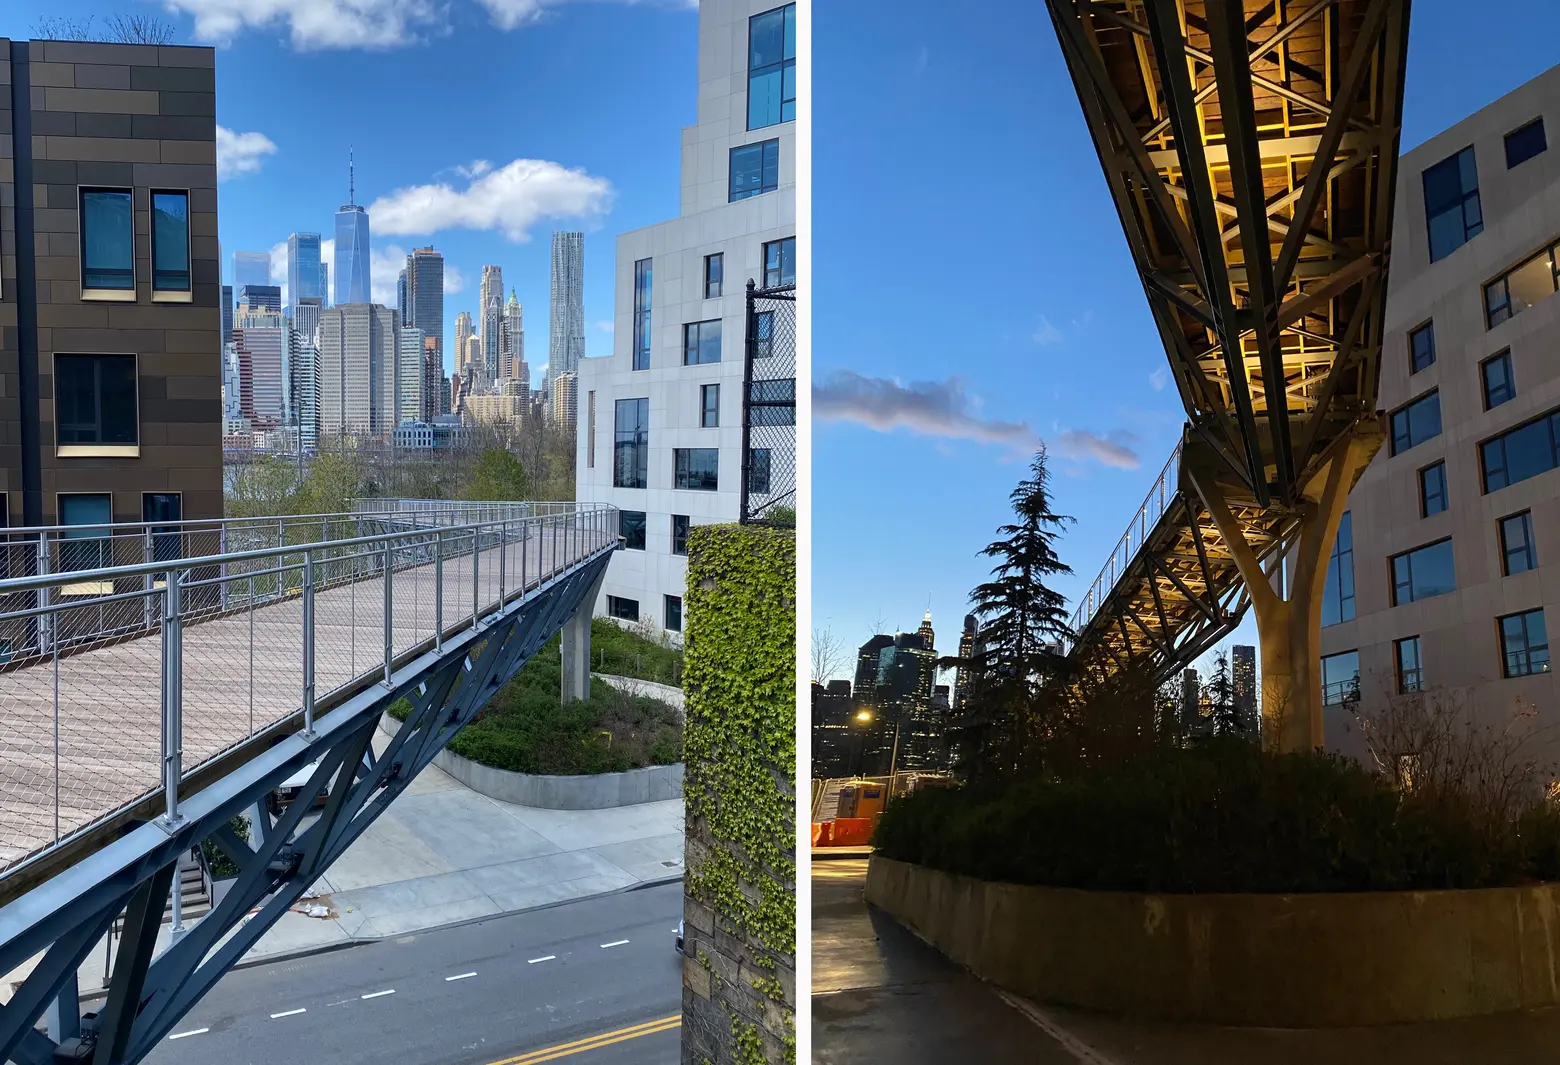 Brooklyn Bridge Park’s rebuilt Squibb Bridge will reopen on May 4